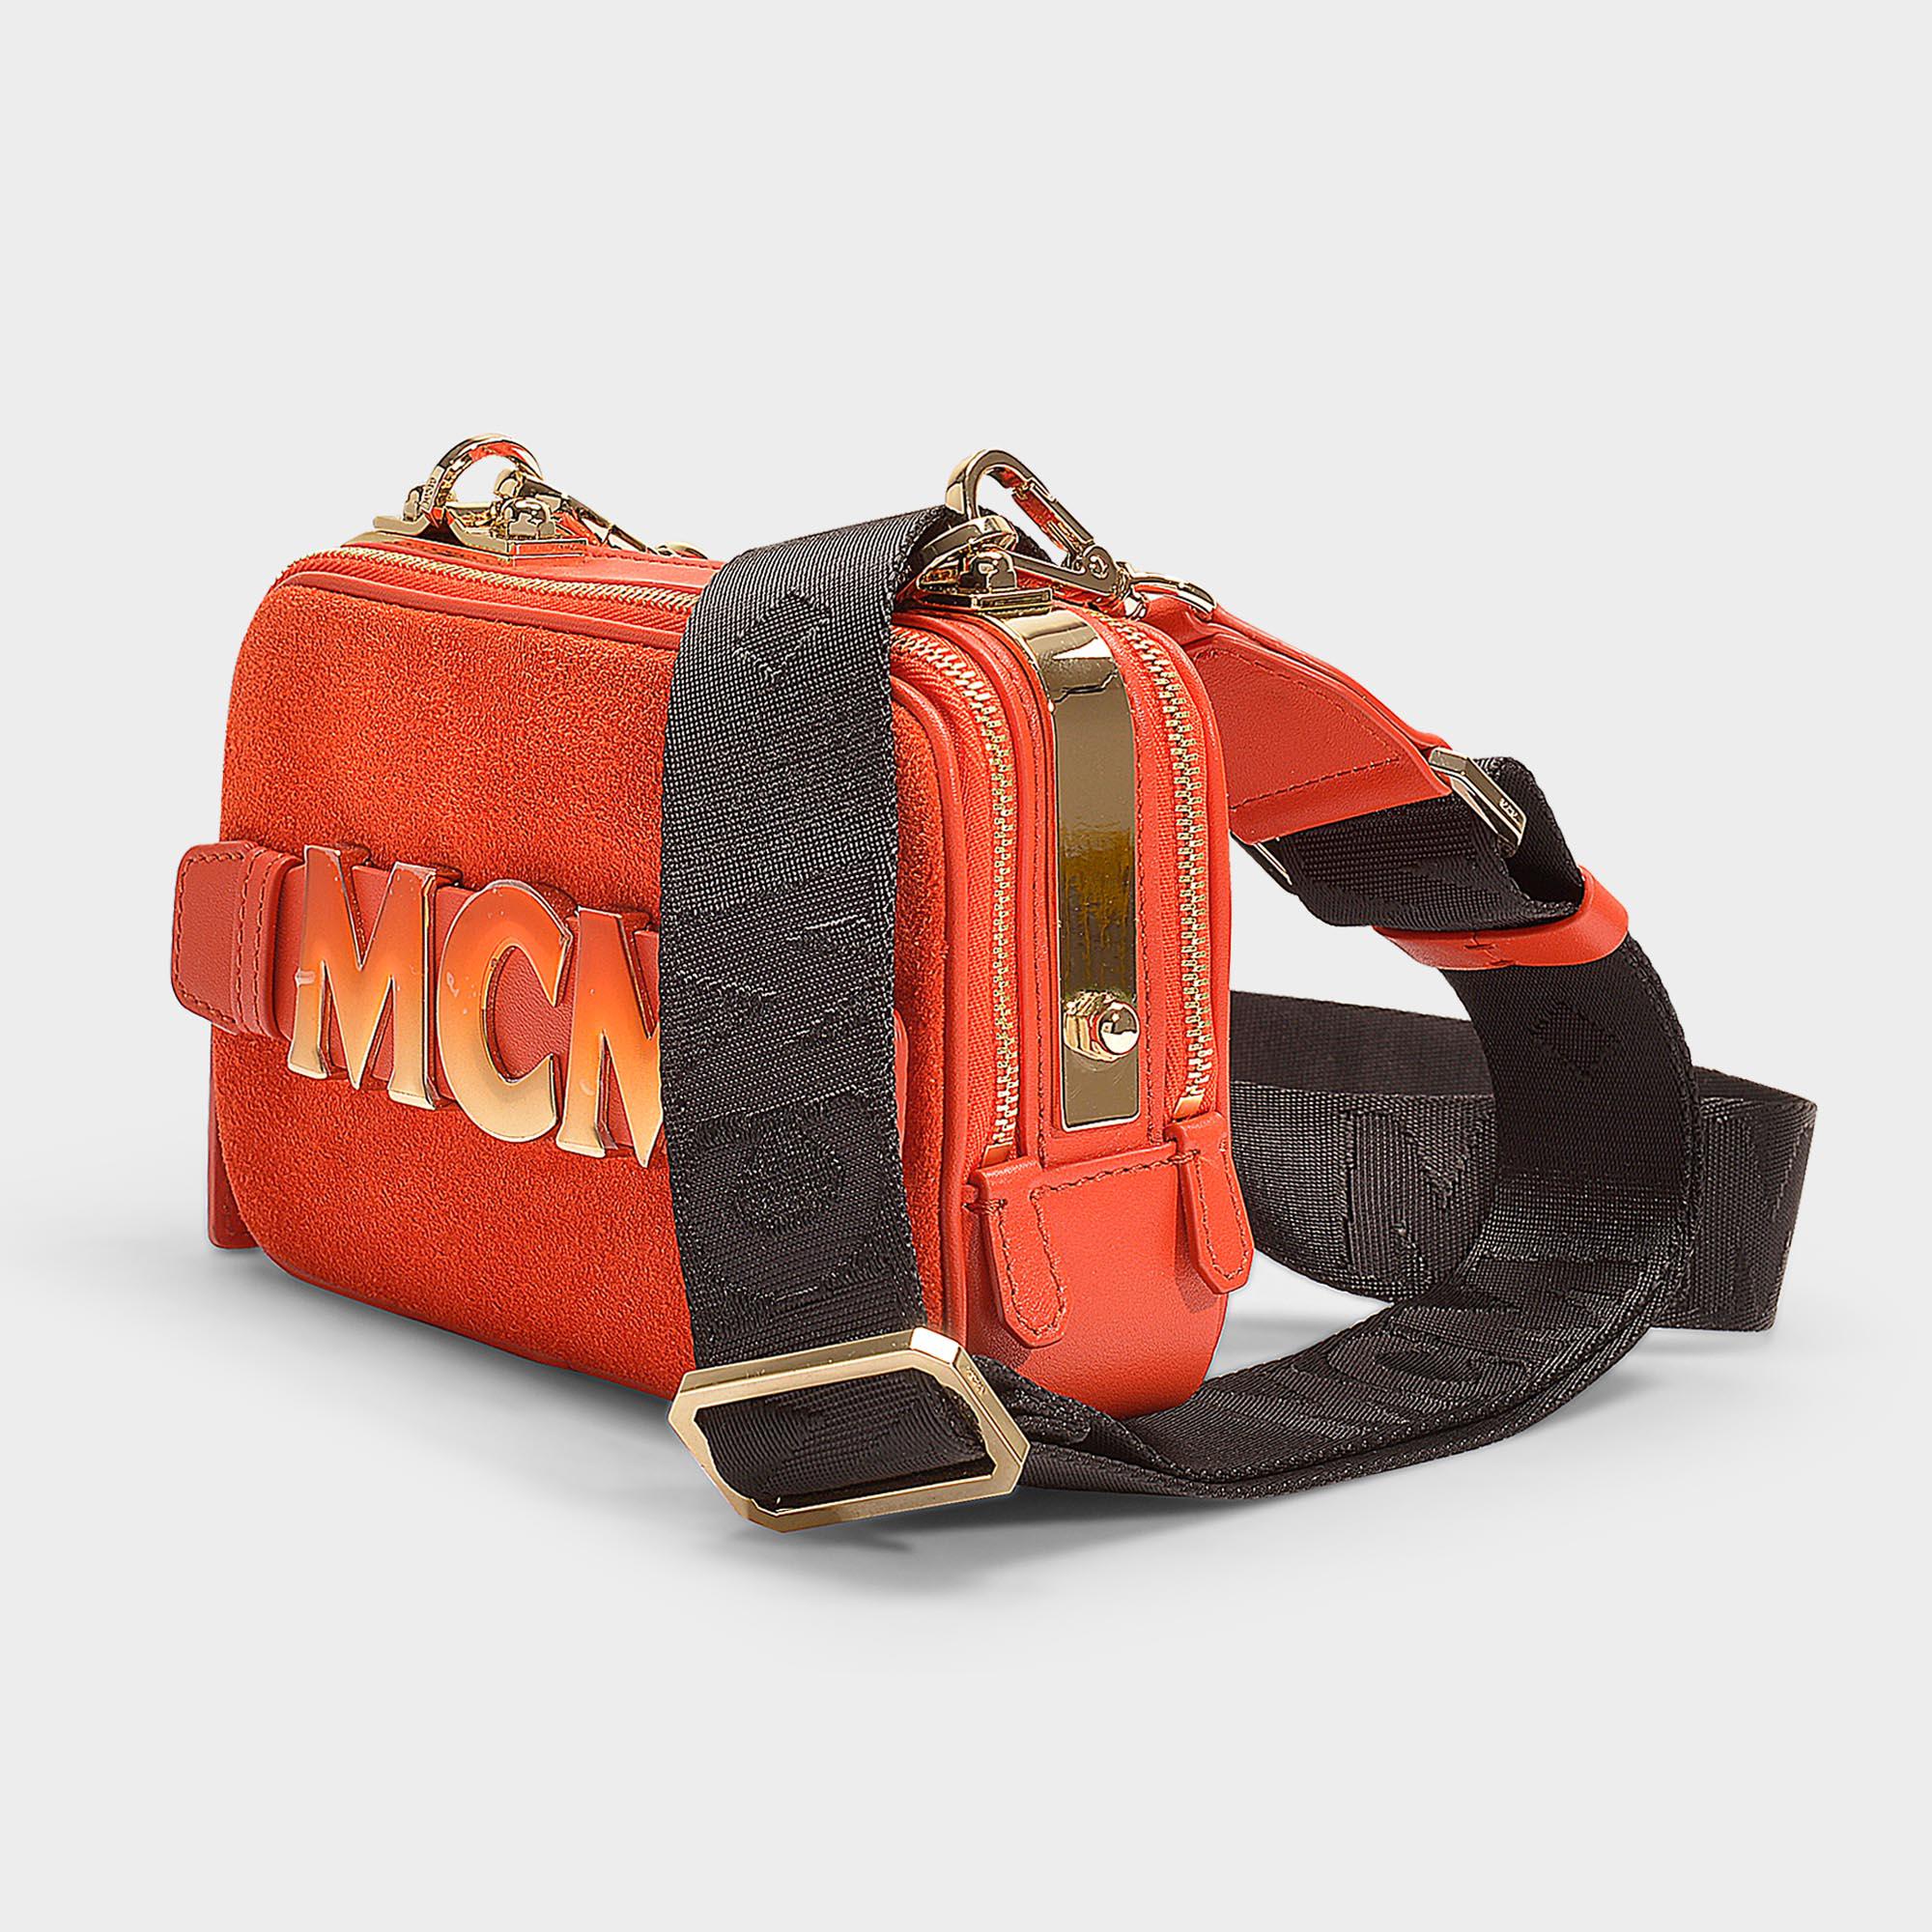 Lyst - MCM Cubism Suede Leather Mini Crossbody Bag In Orange And Beige Calfskin in Orange